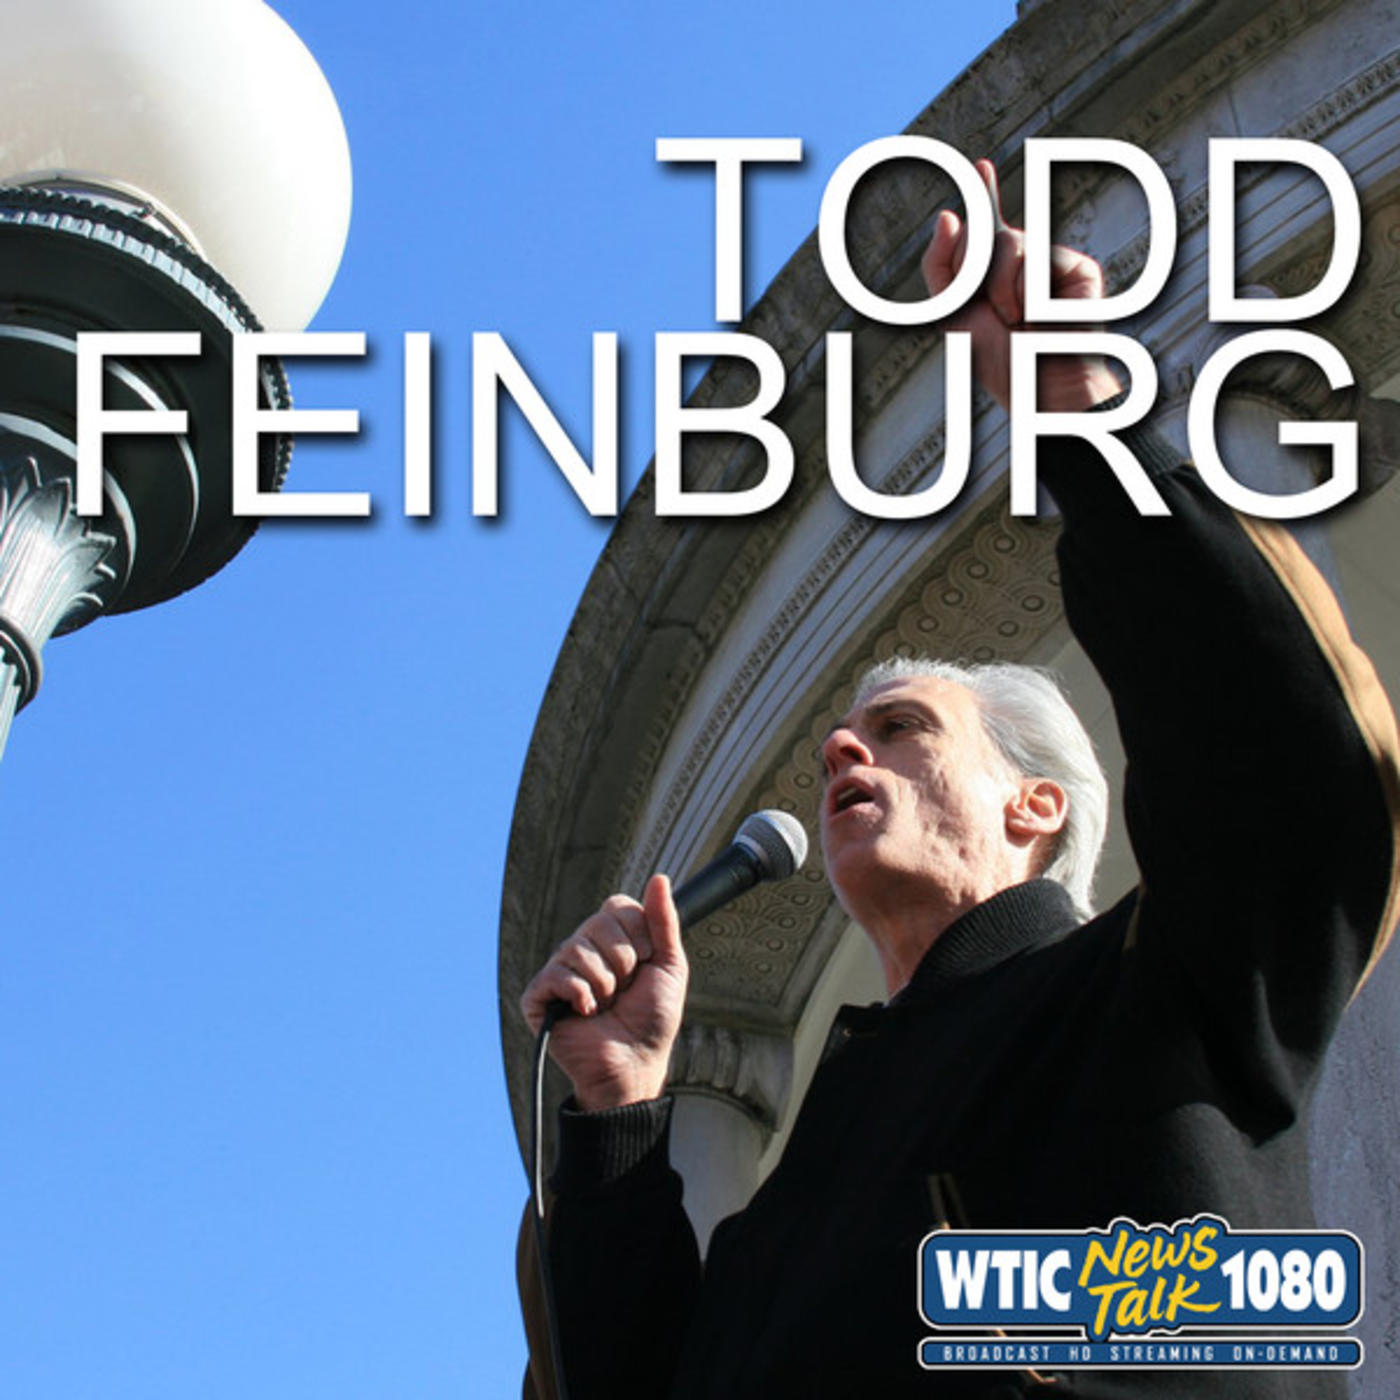 Todd Feinburg: A Viral Conversation with Tom Shattuck (04/13/20)